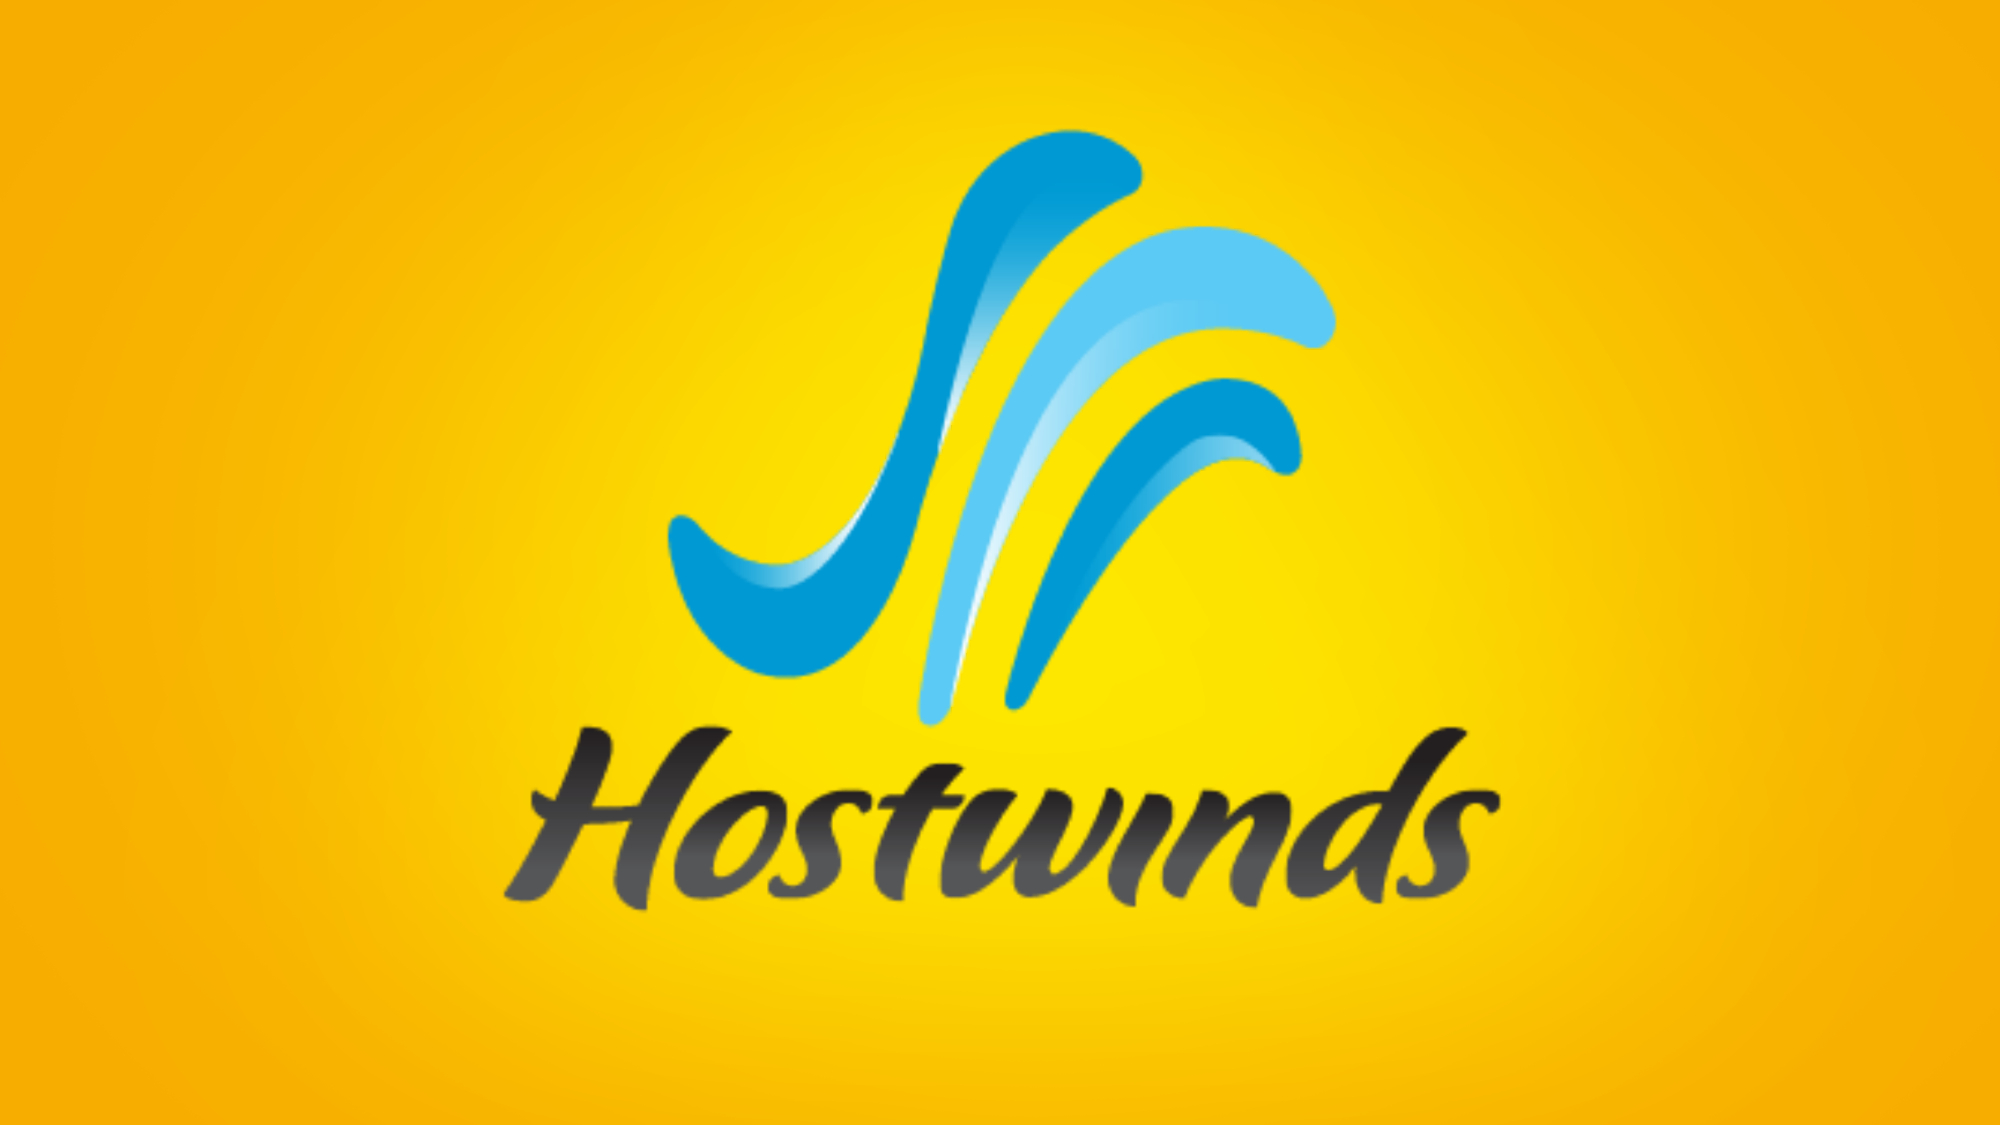 Hostwinds logo on yellow background